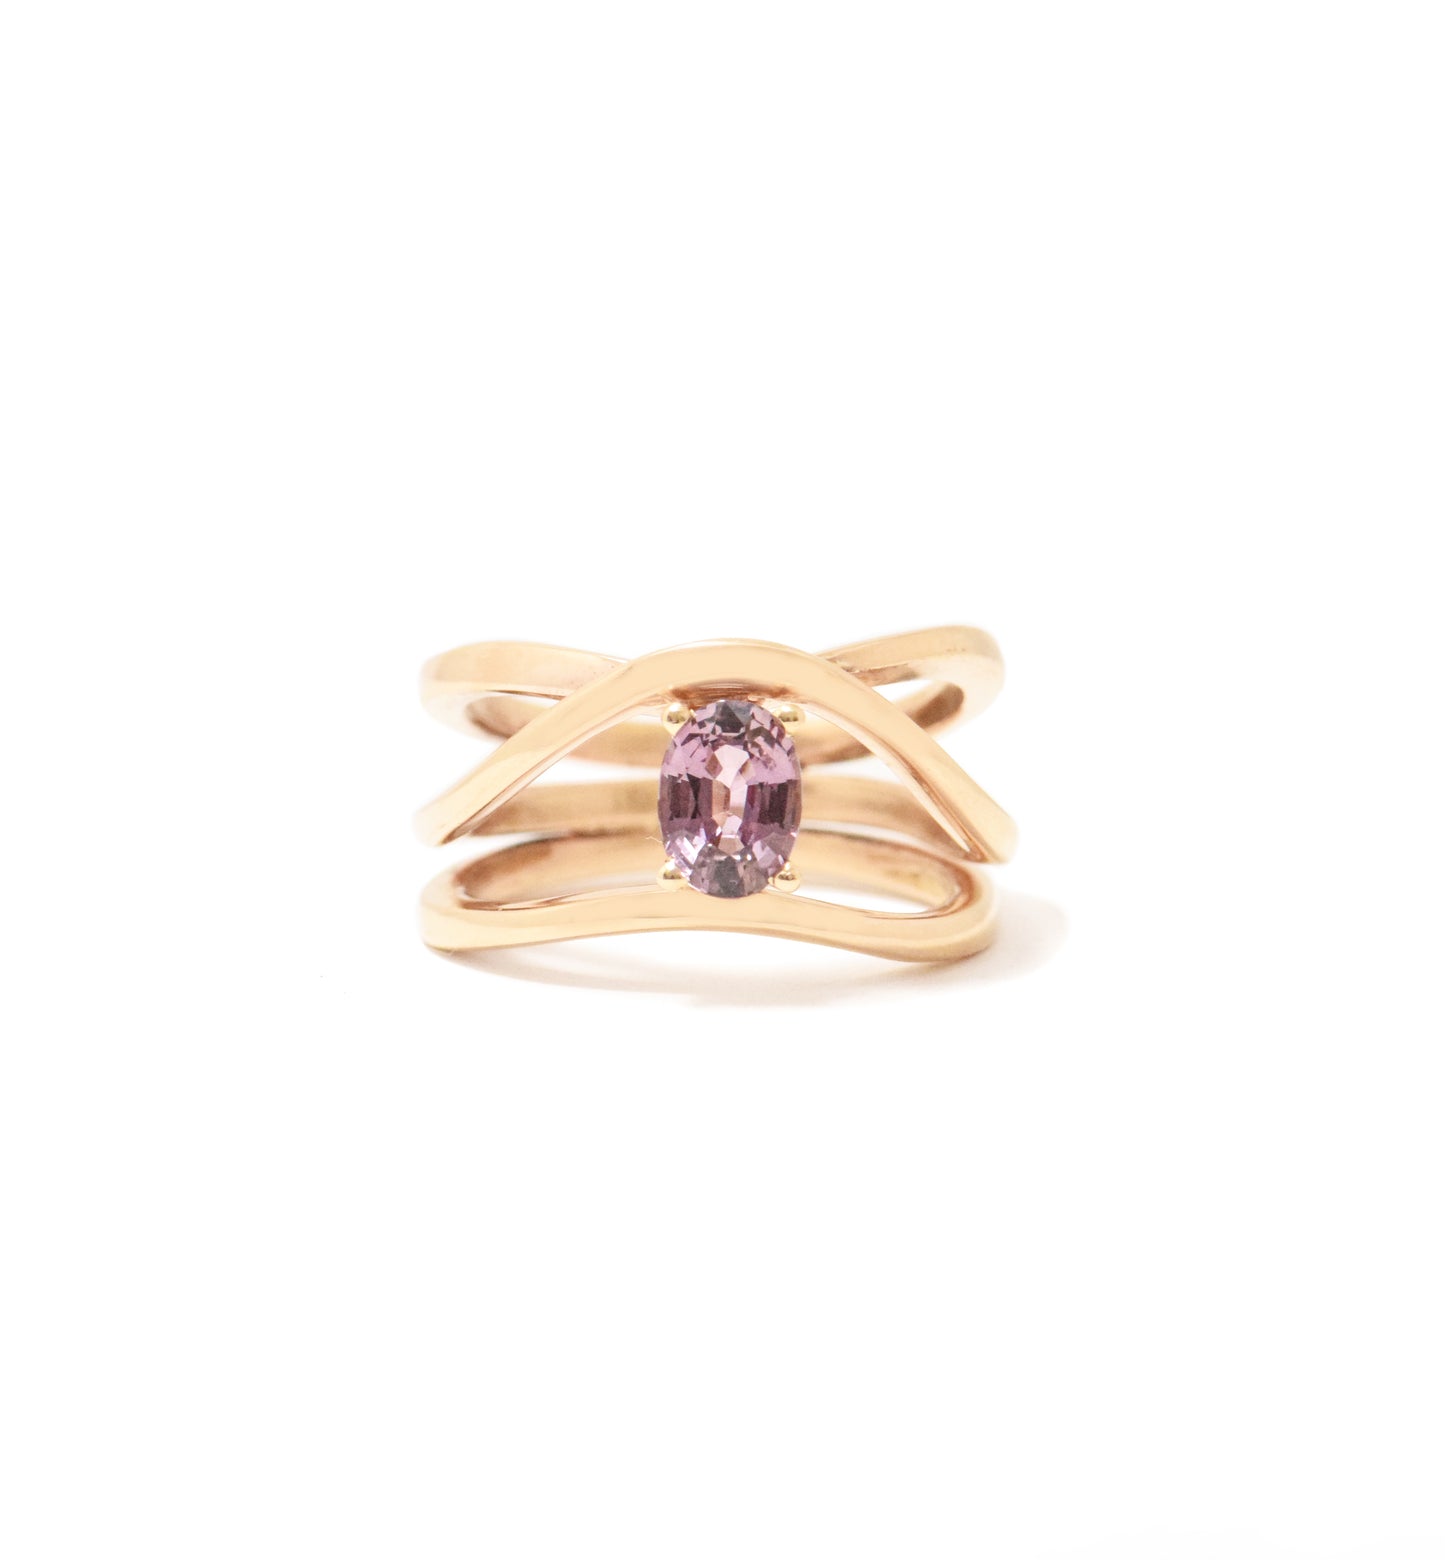 Adrift Ring featuring a Mauve Sapphire